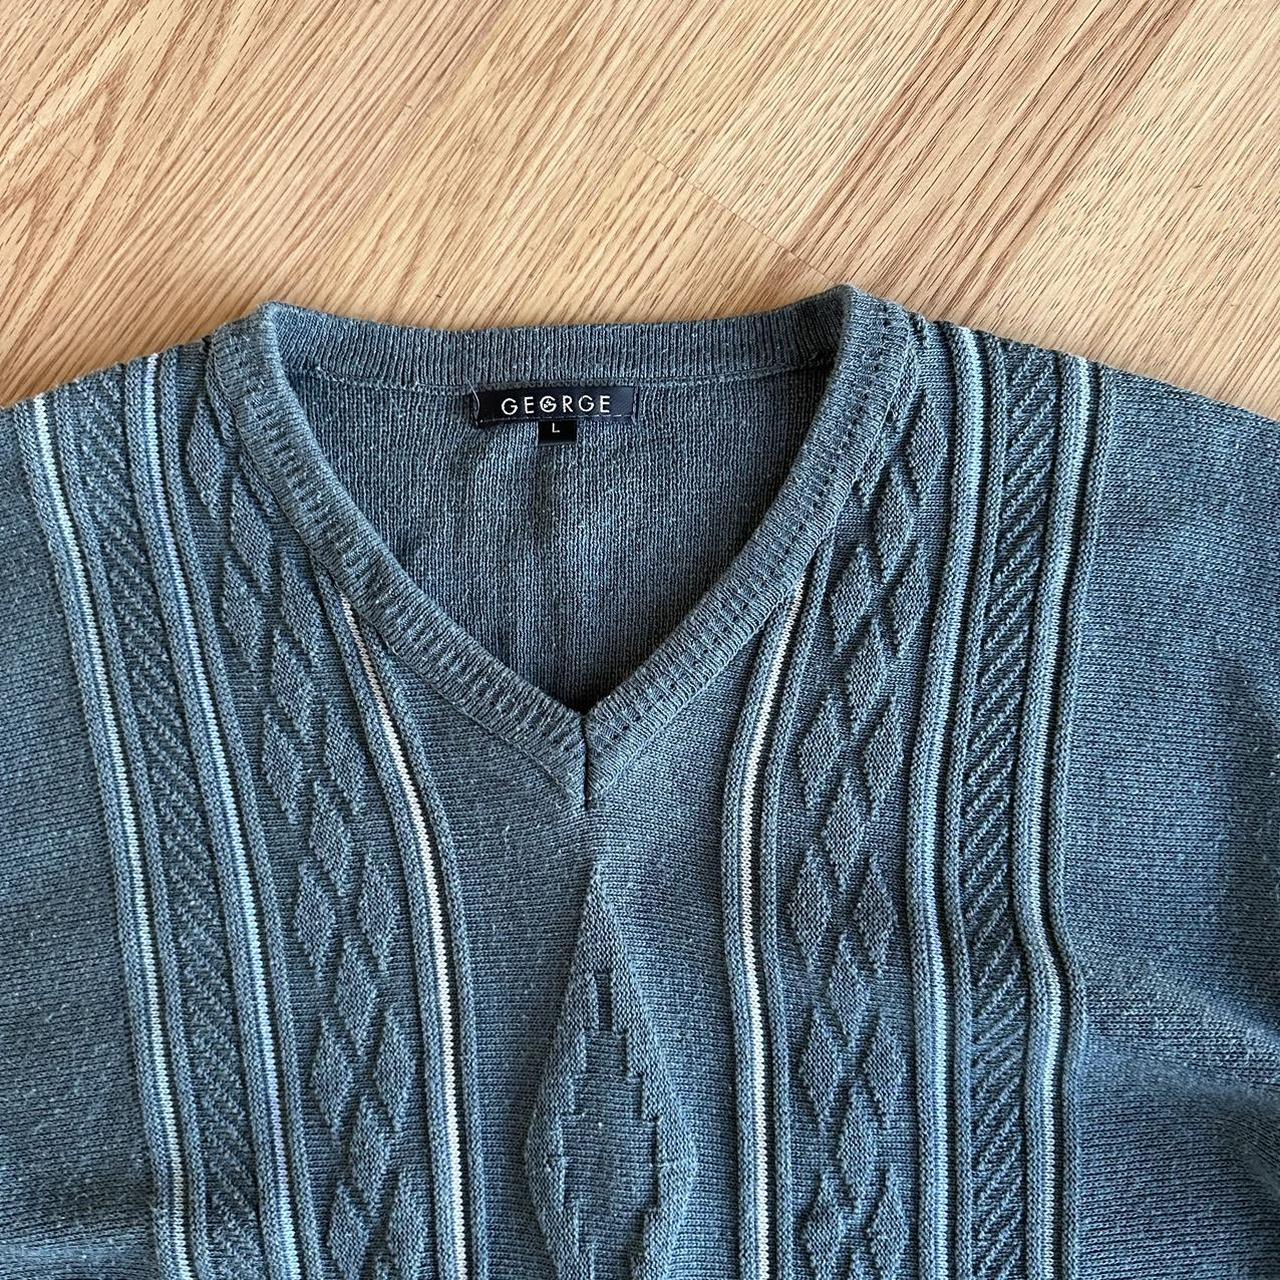 Vintage George knit sweatshirt Colour is lovely -... - Depop